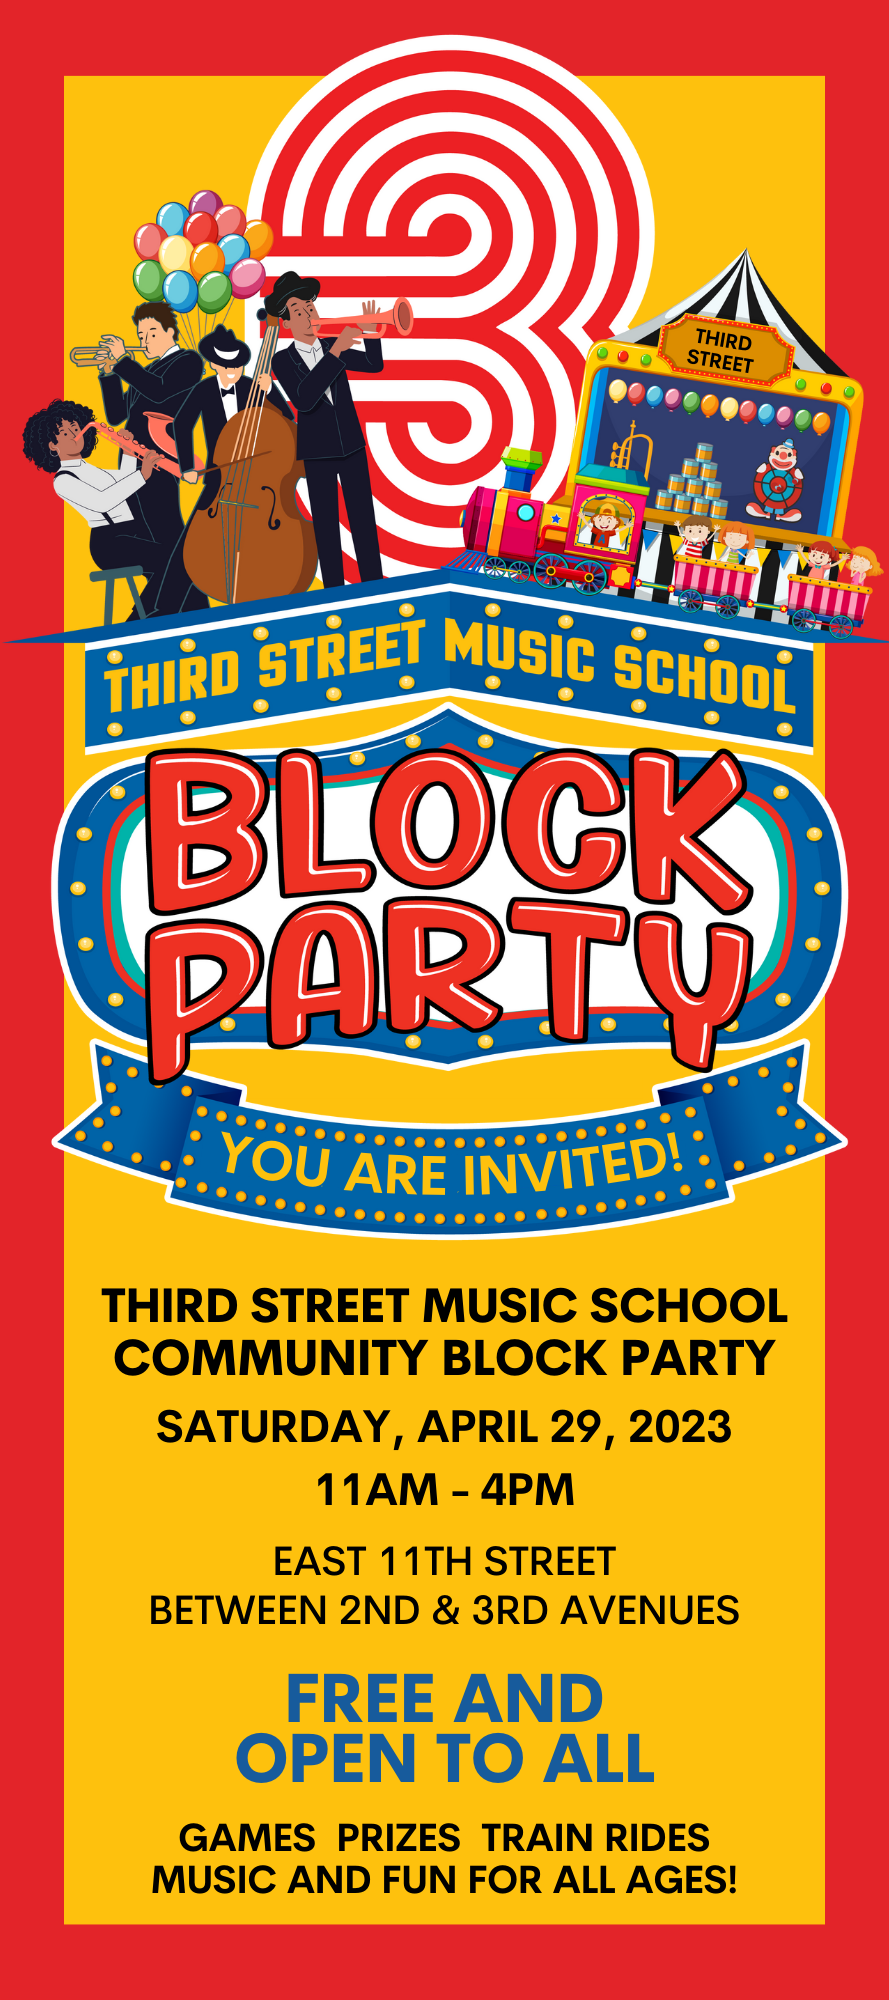 Third Street Music School Block Party Saturday, April 29th 11am – 4pm